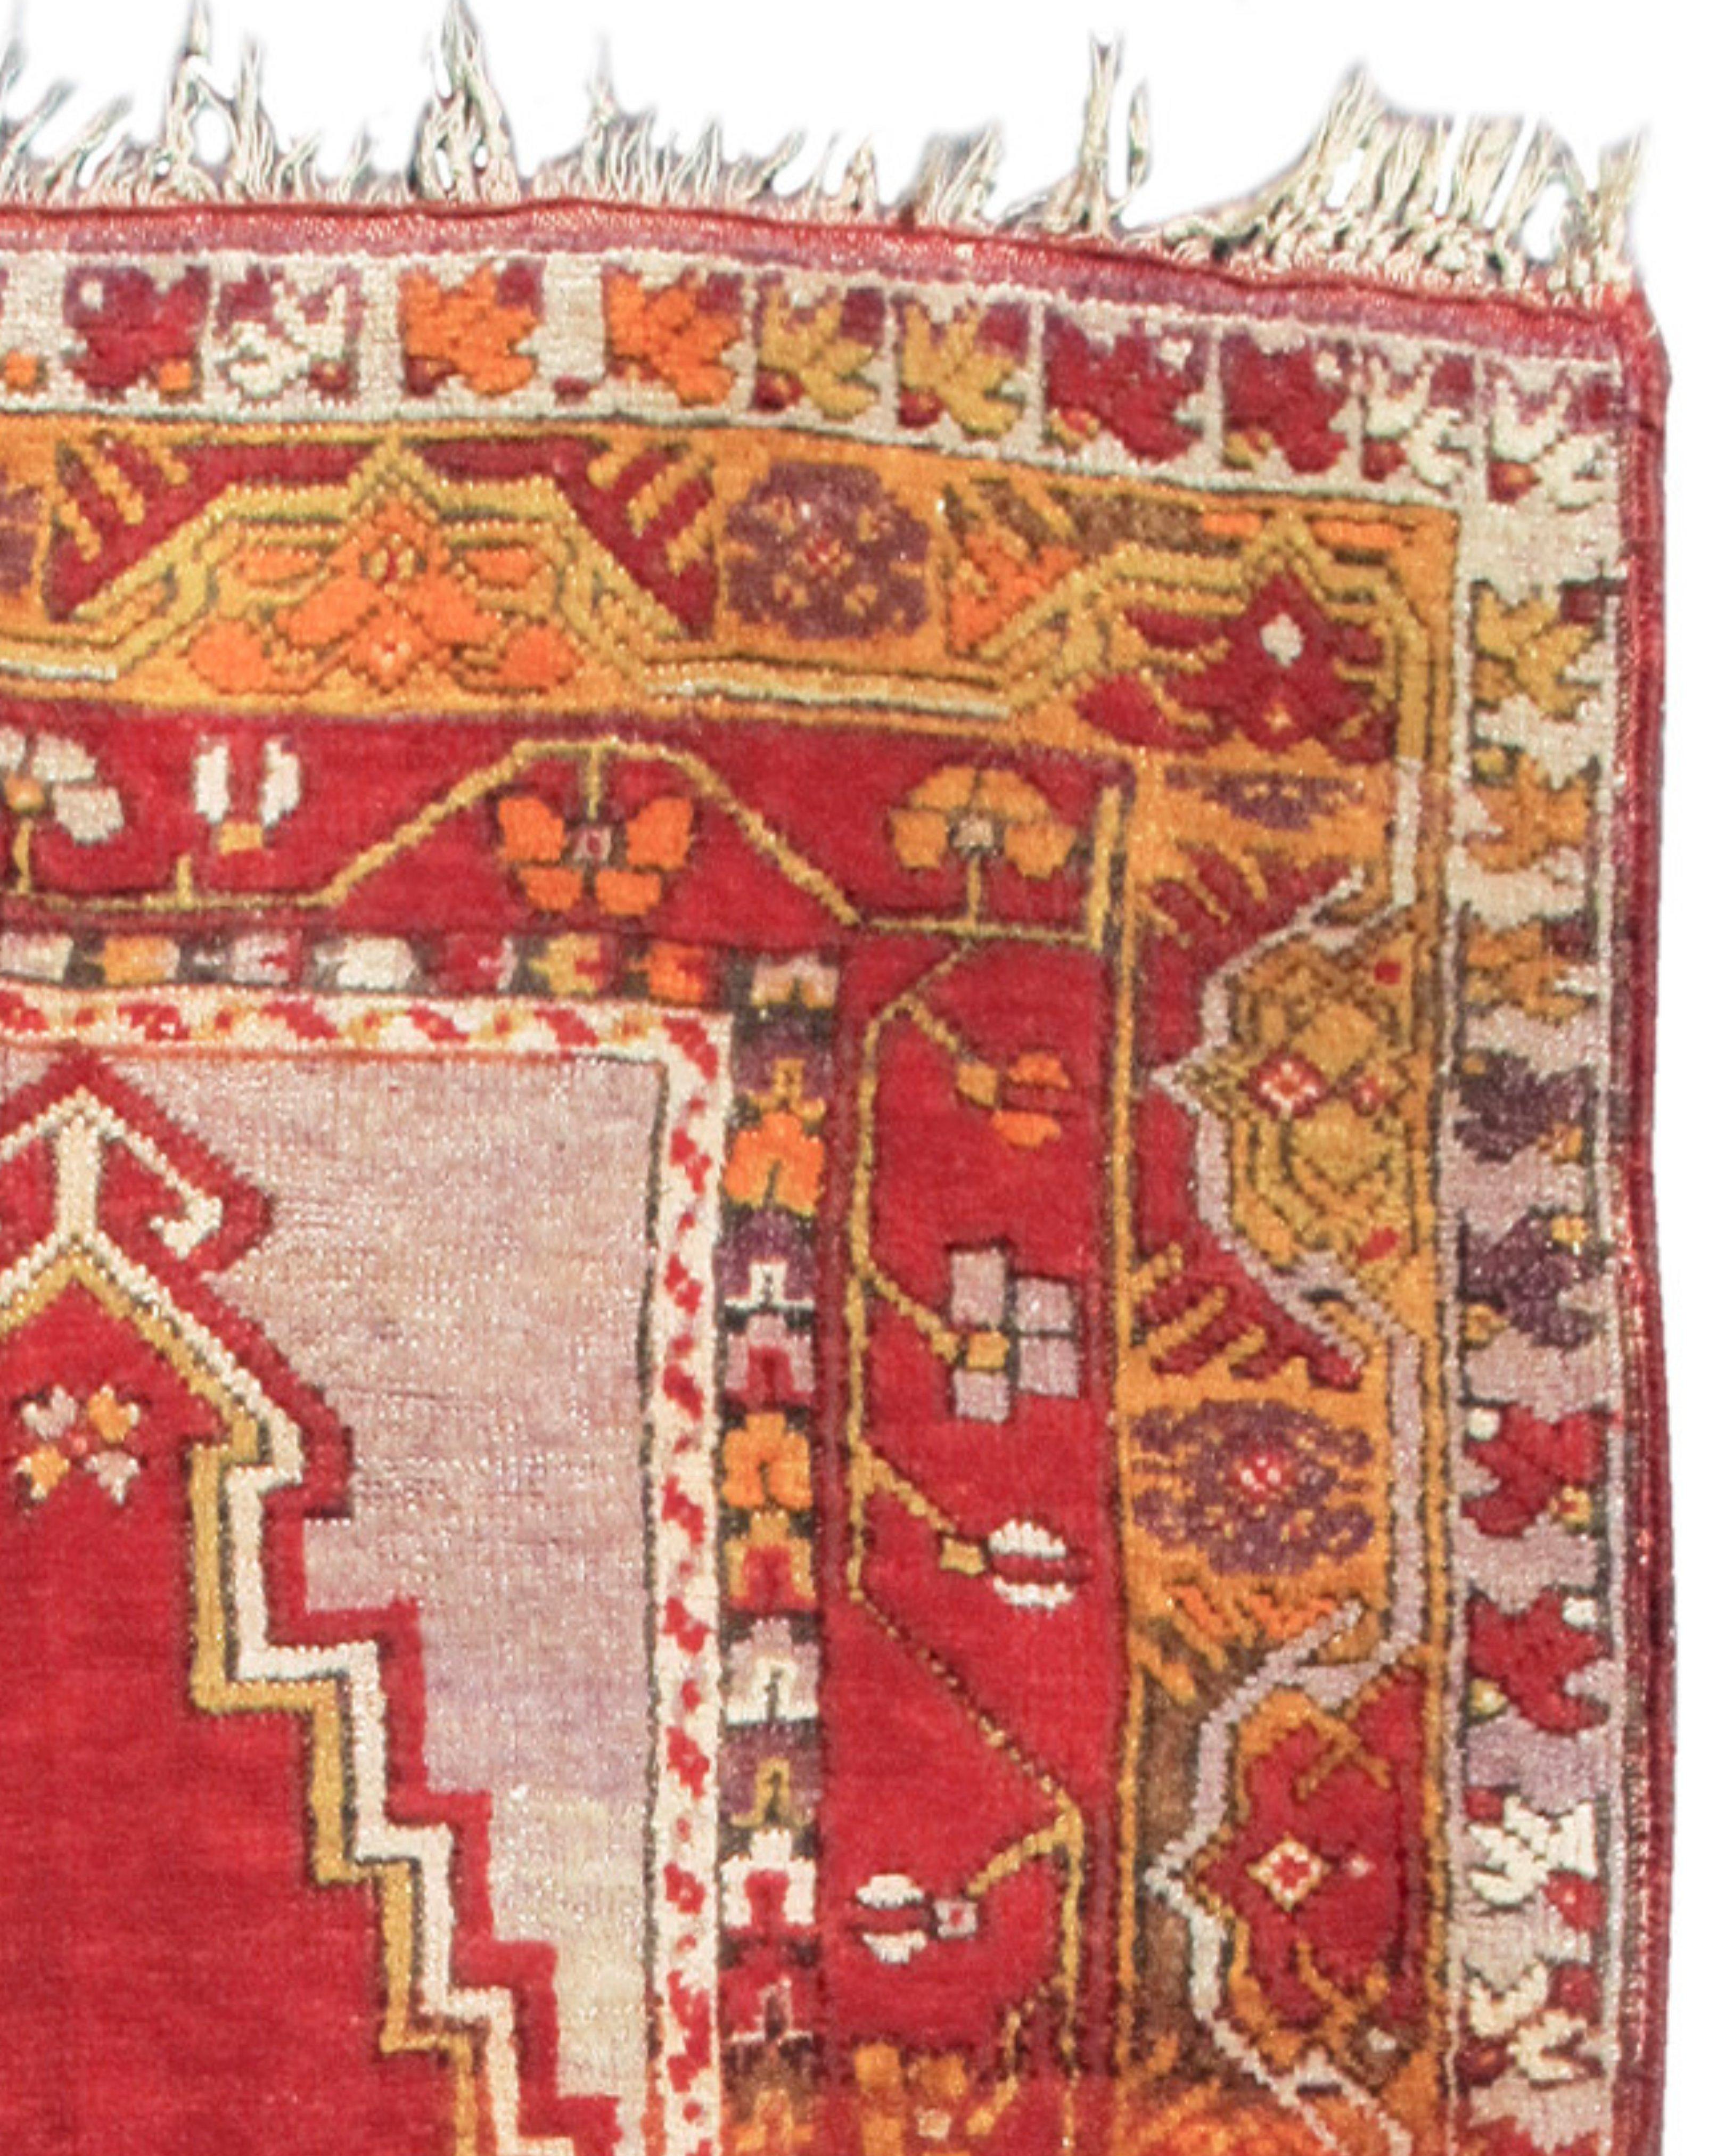 Turkish prayer rug, c. 1900

Additional Information:
Dimensions: 2'10